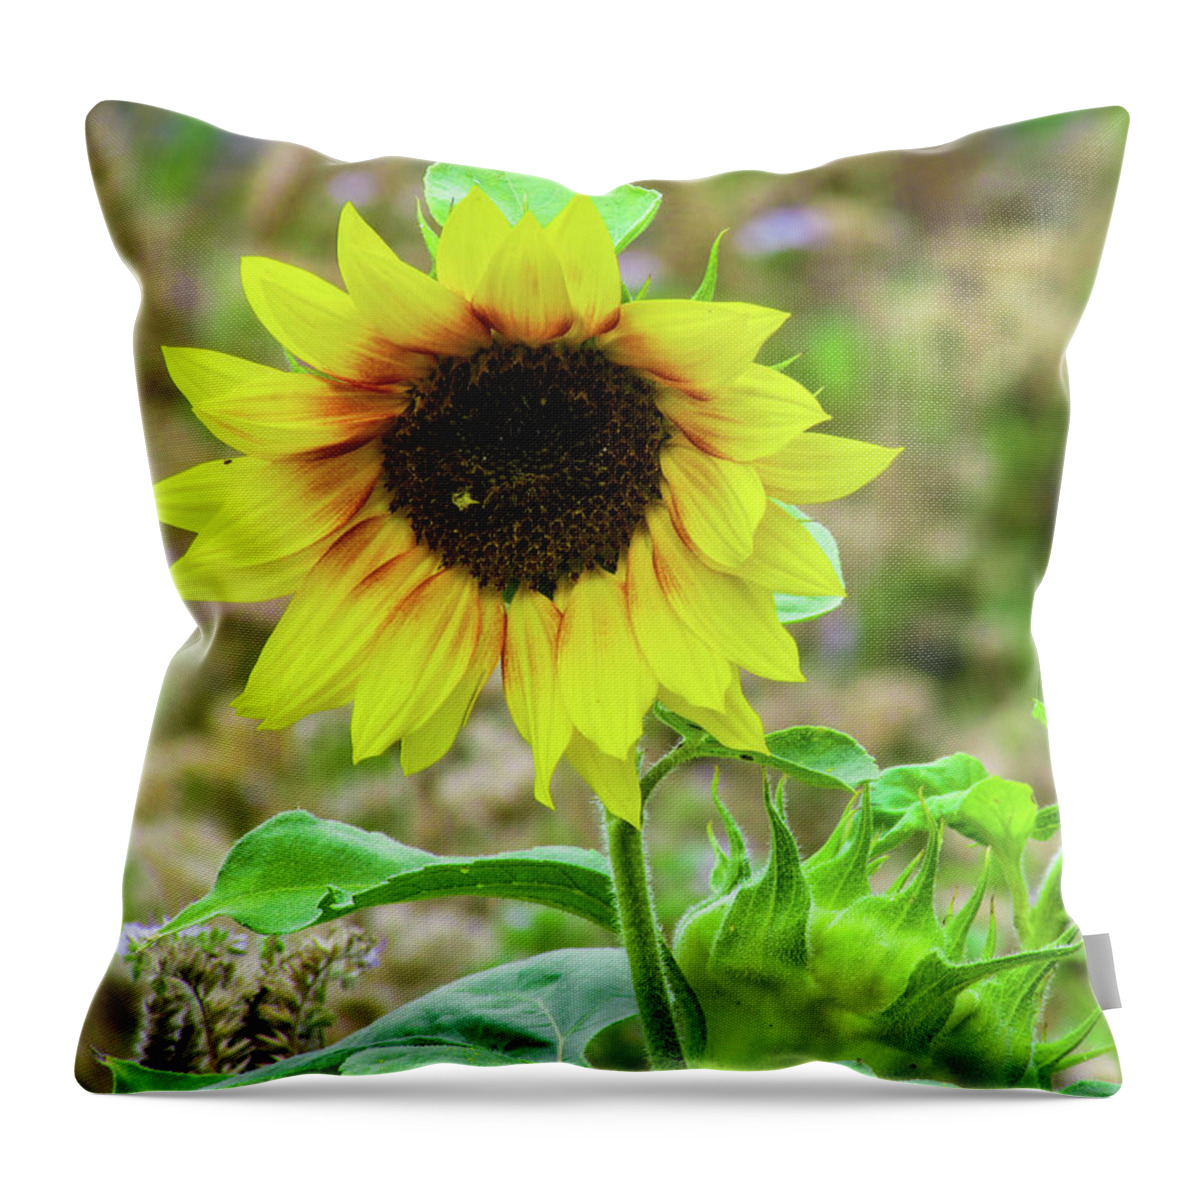 Flower Throw Pillow featuring the photograph Sunflowers #1 by Cesar Vieira